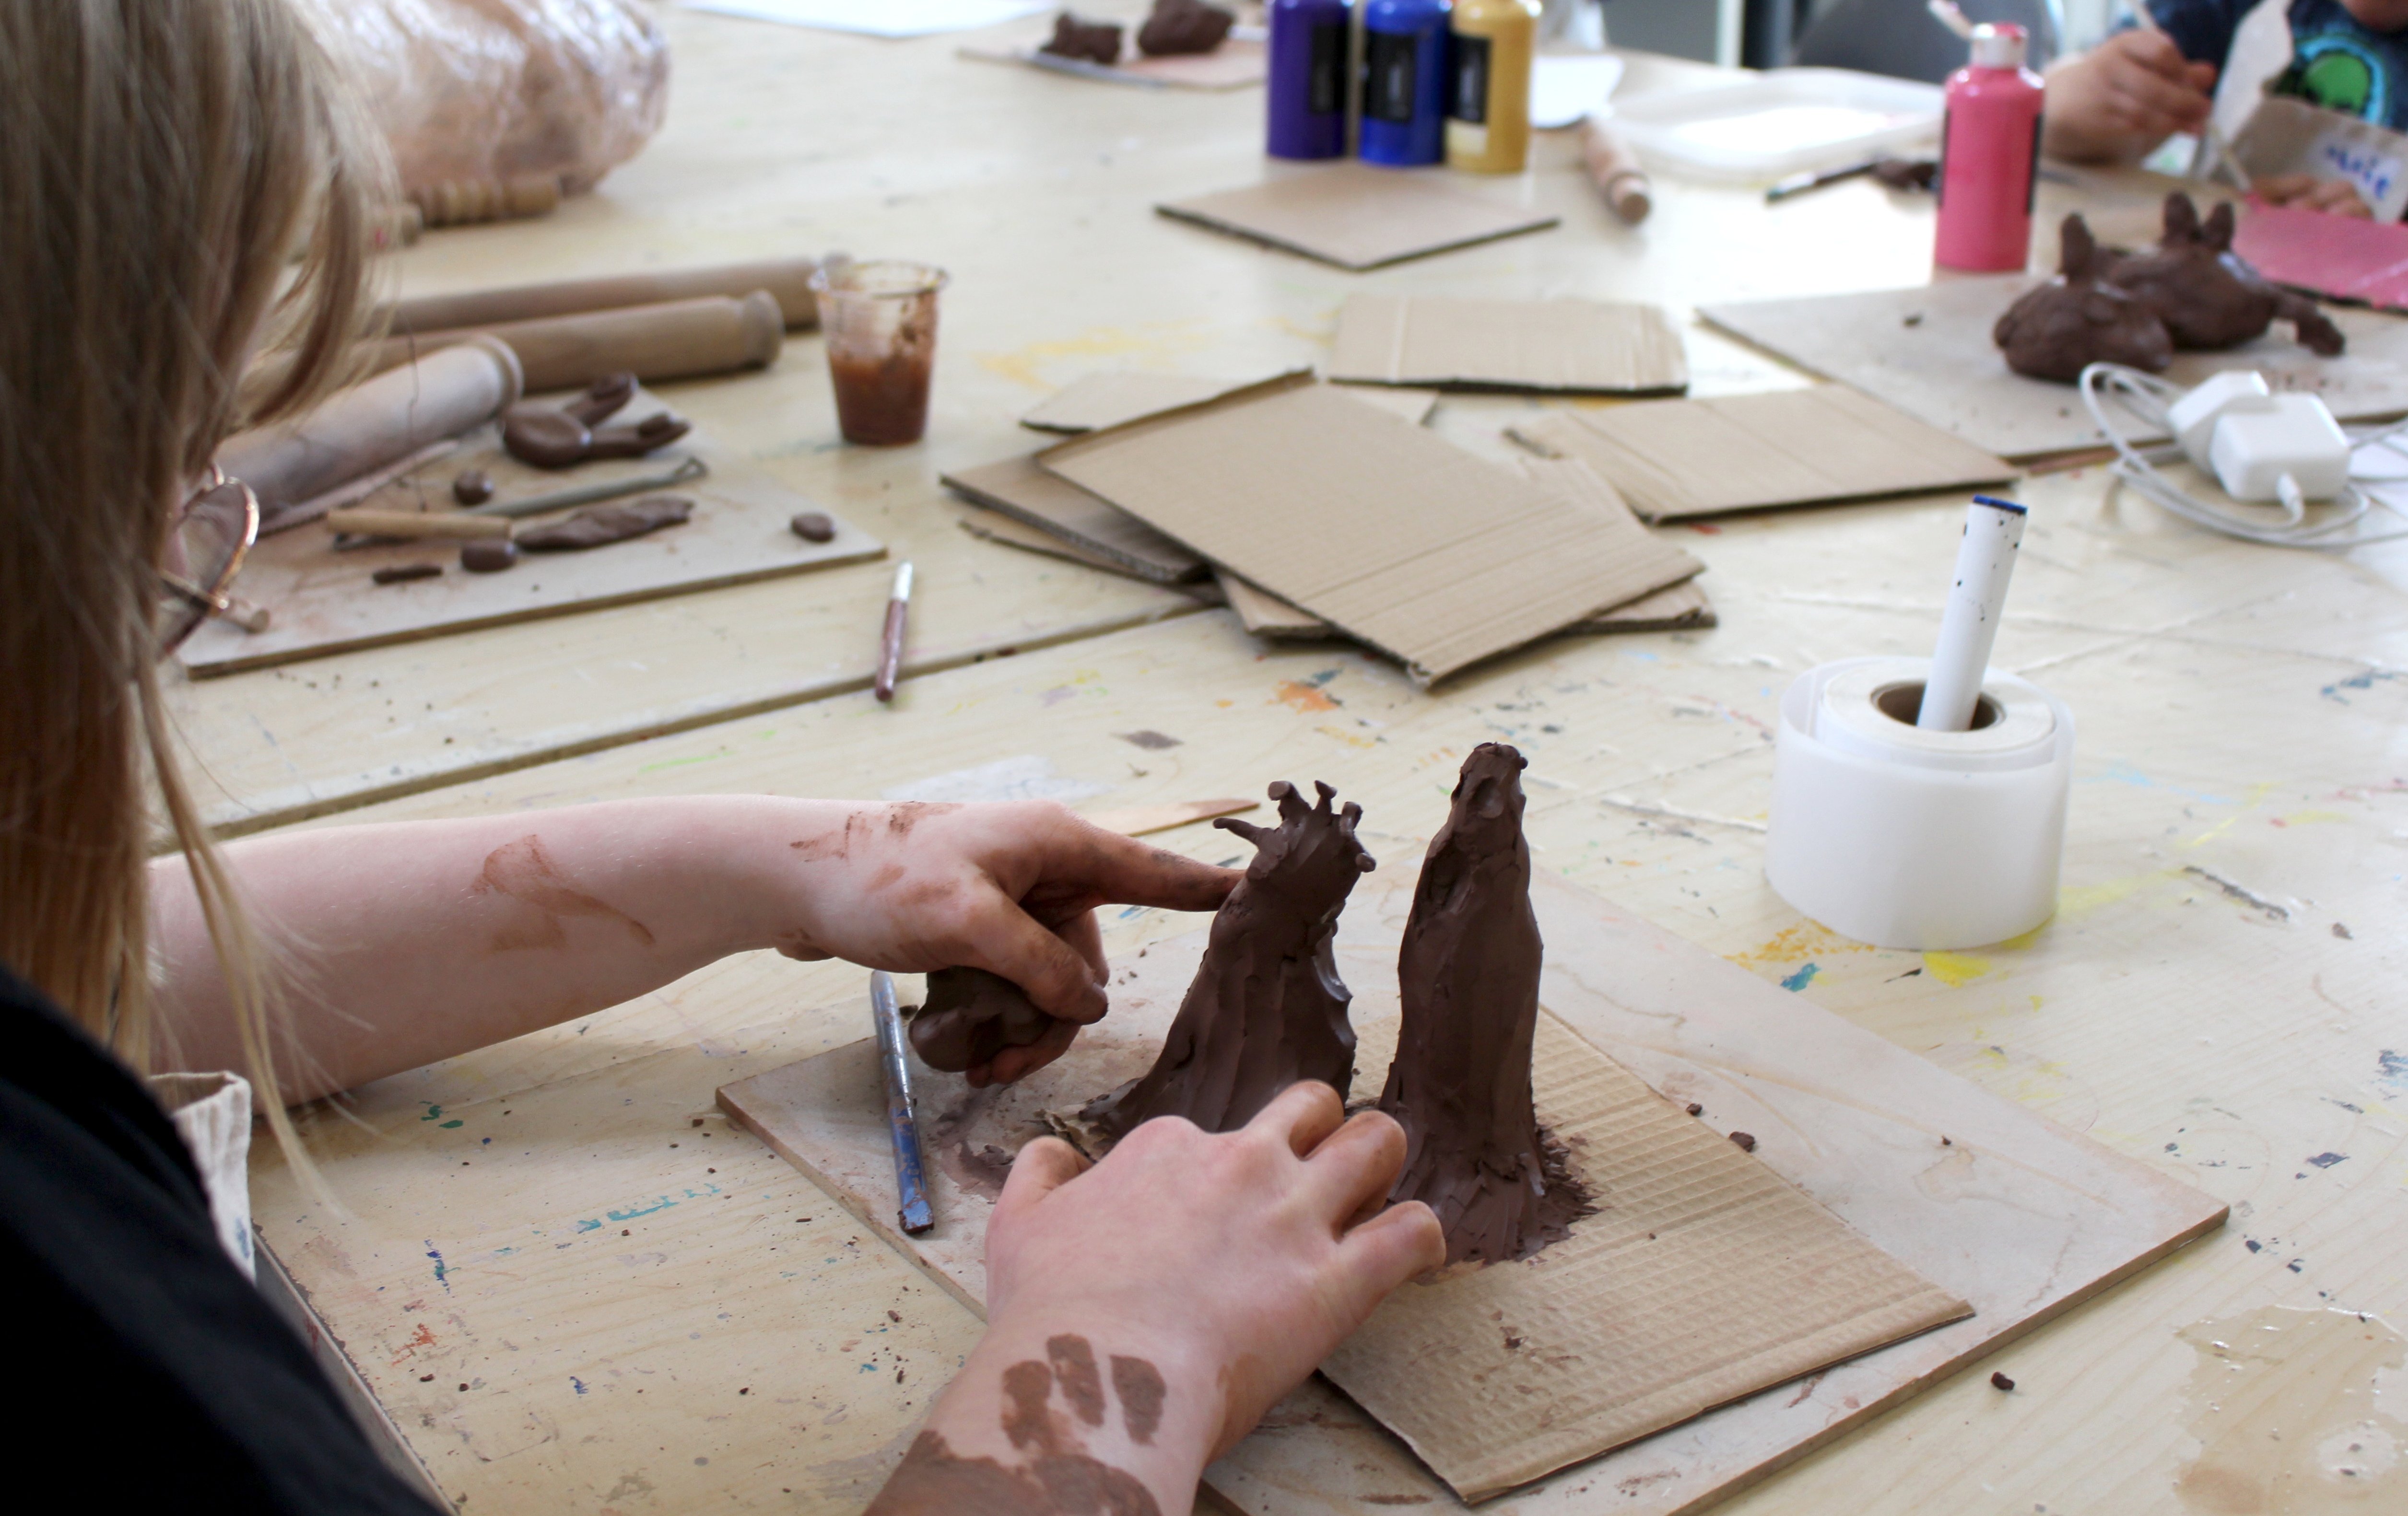 Workshop participants moulding clay into form